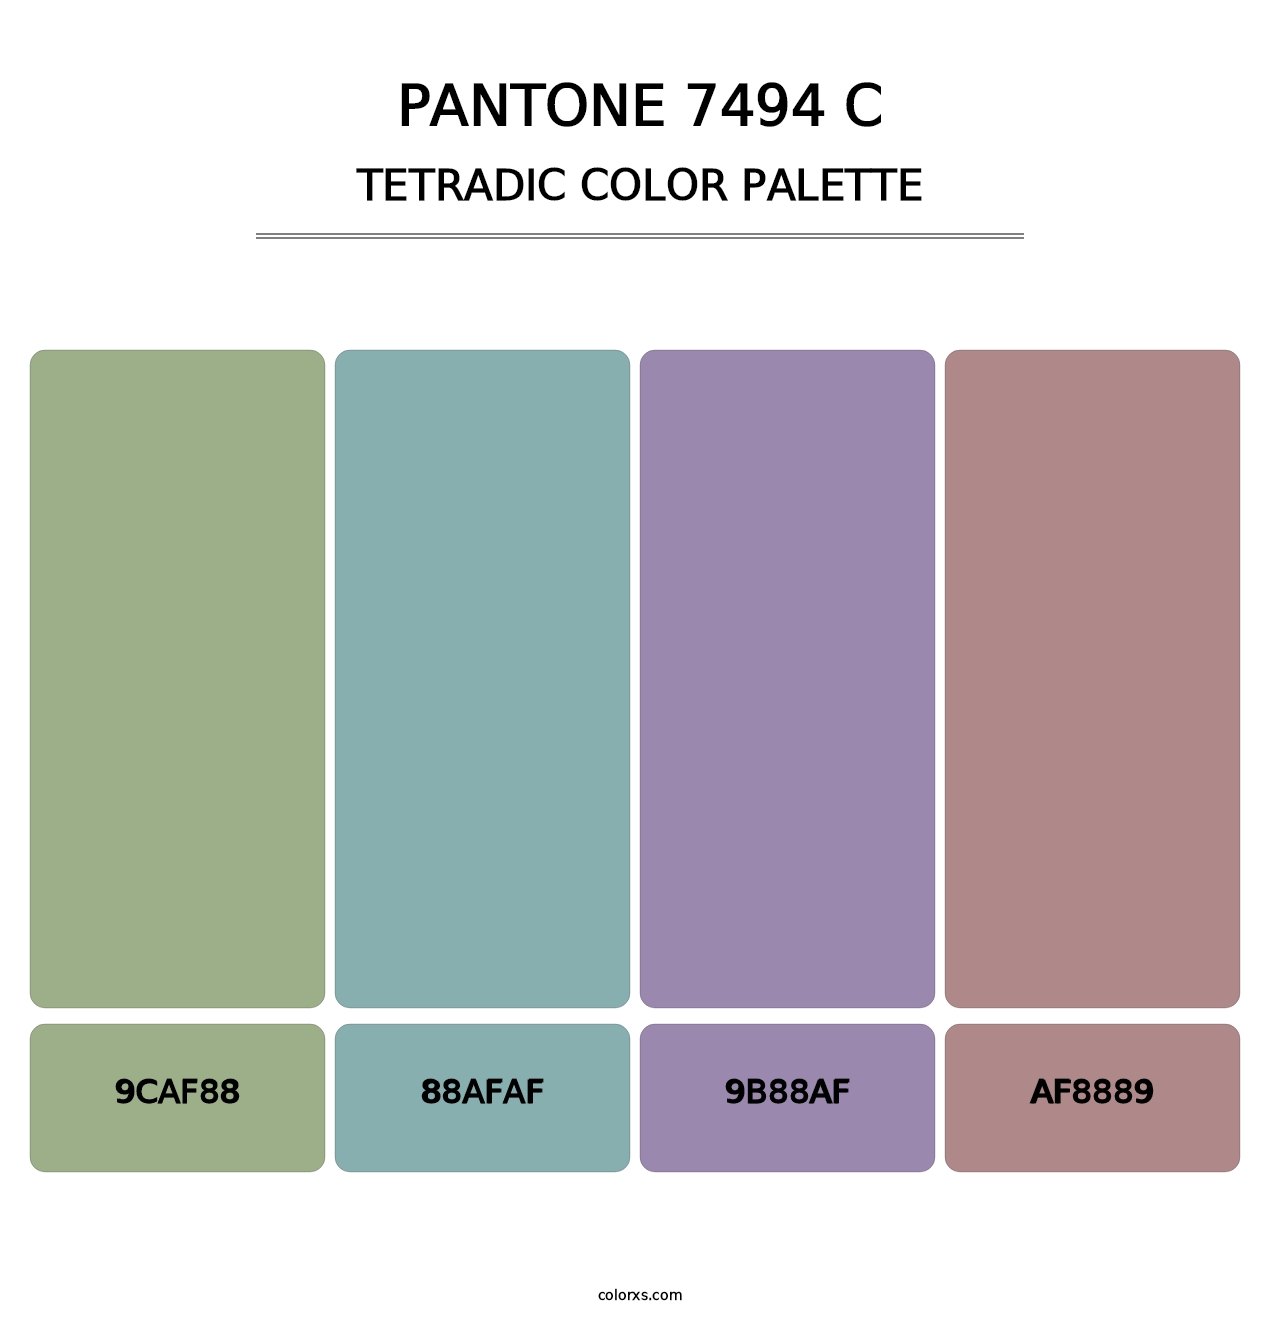 PANTONE 7494 C - Tetradic Color Palette